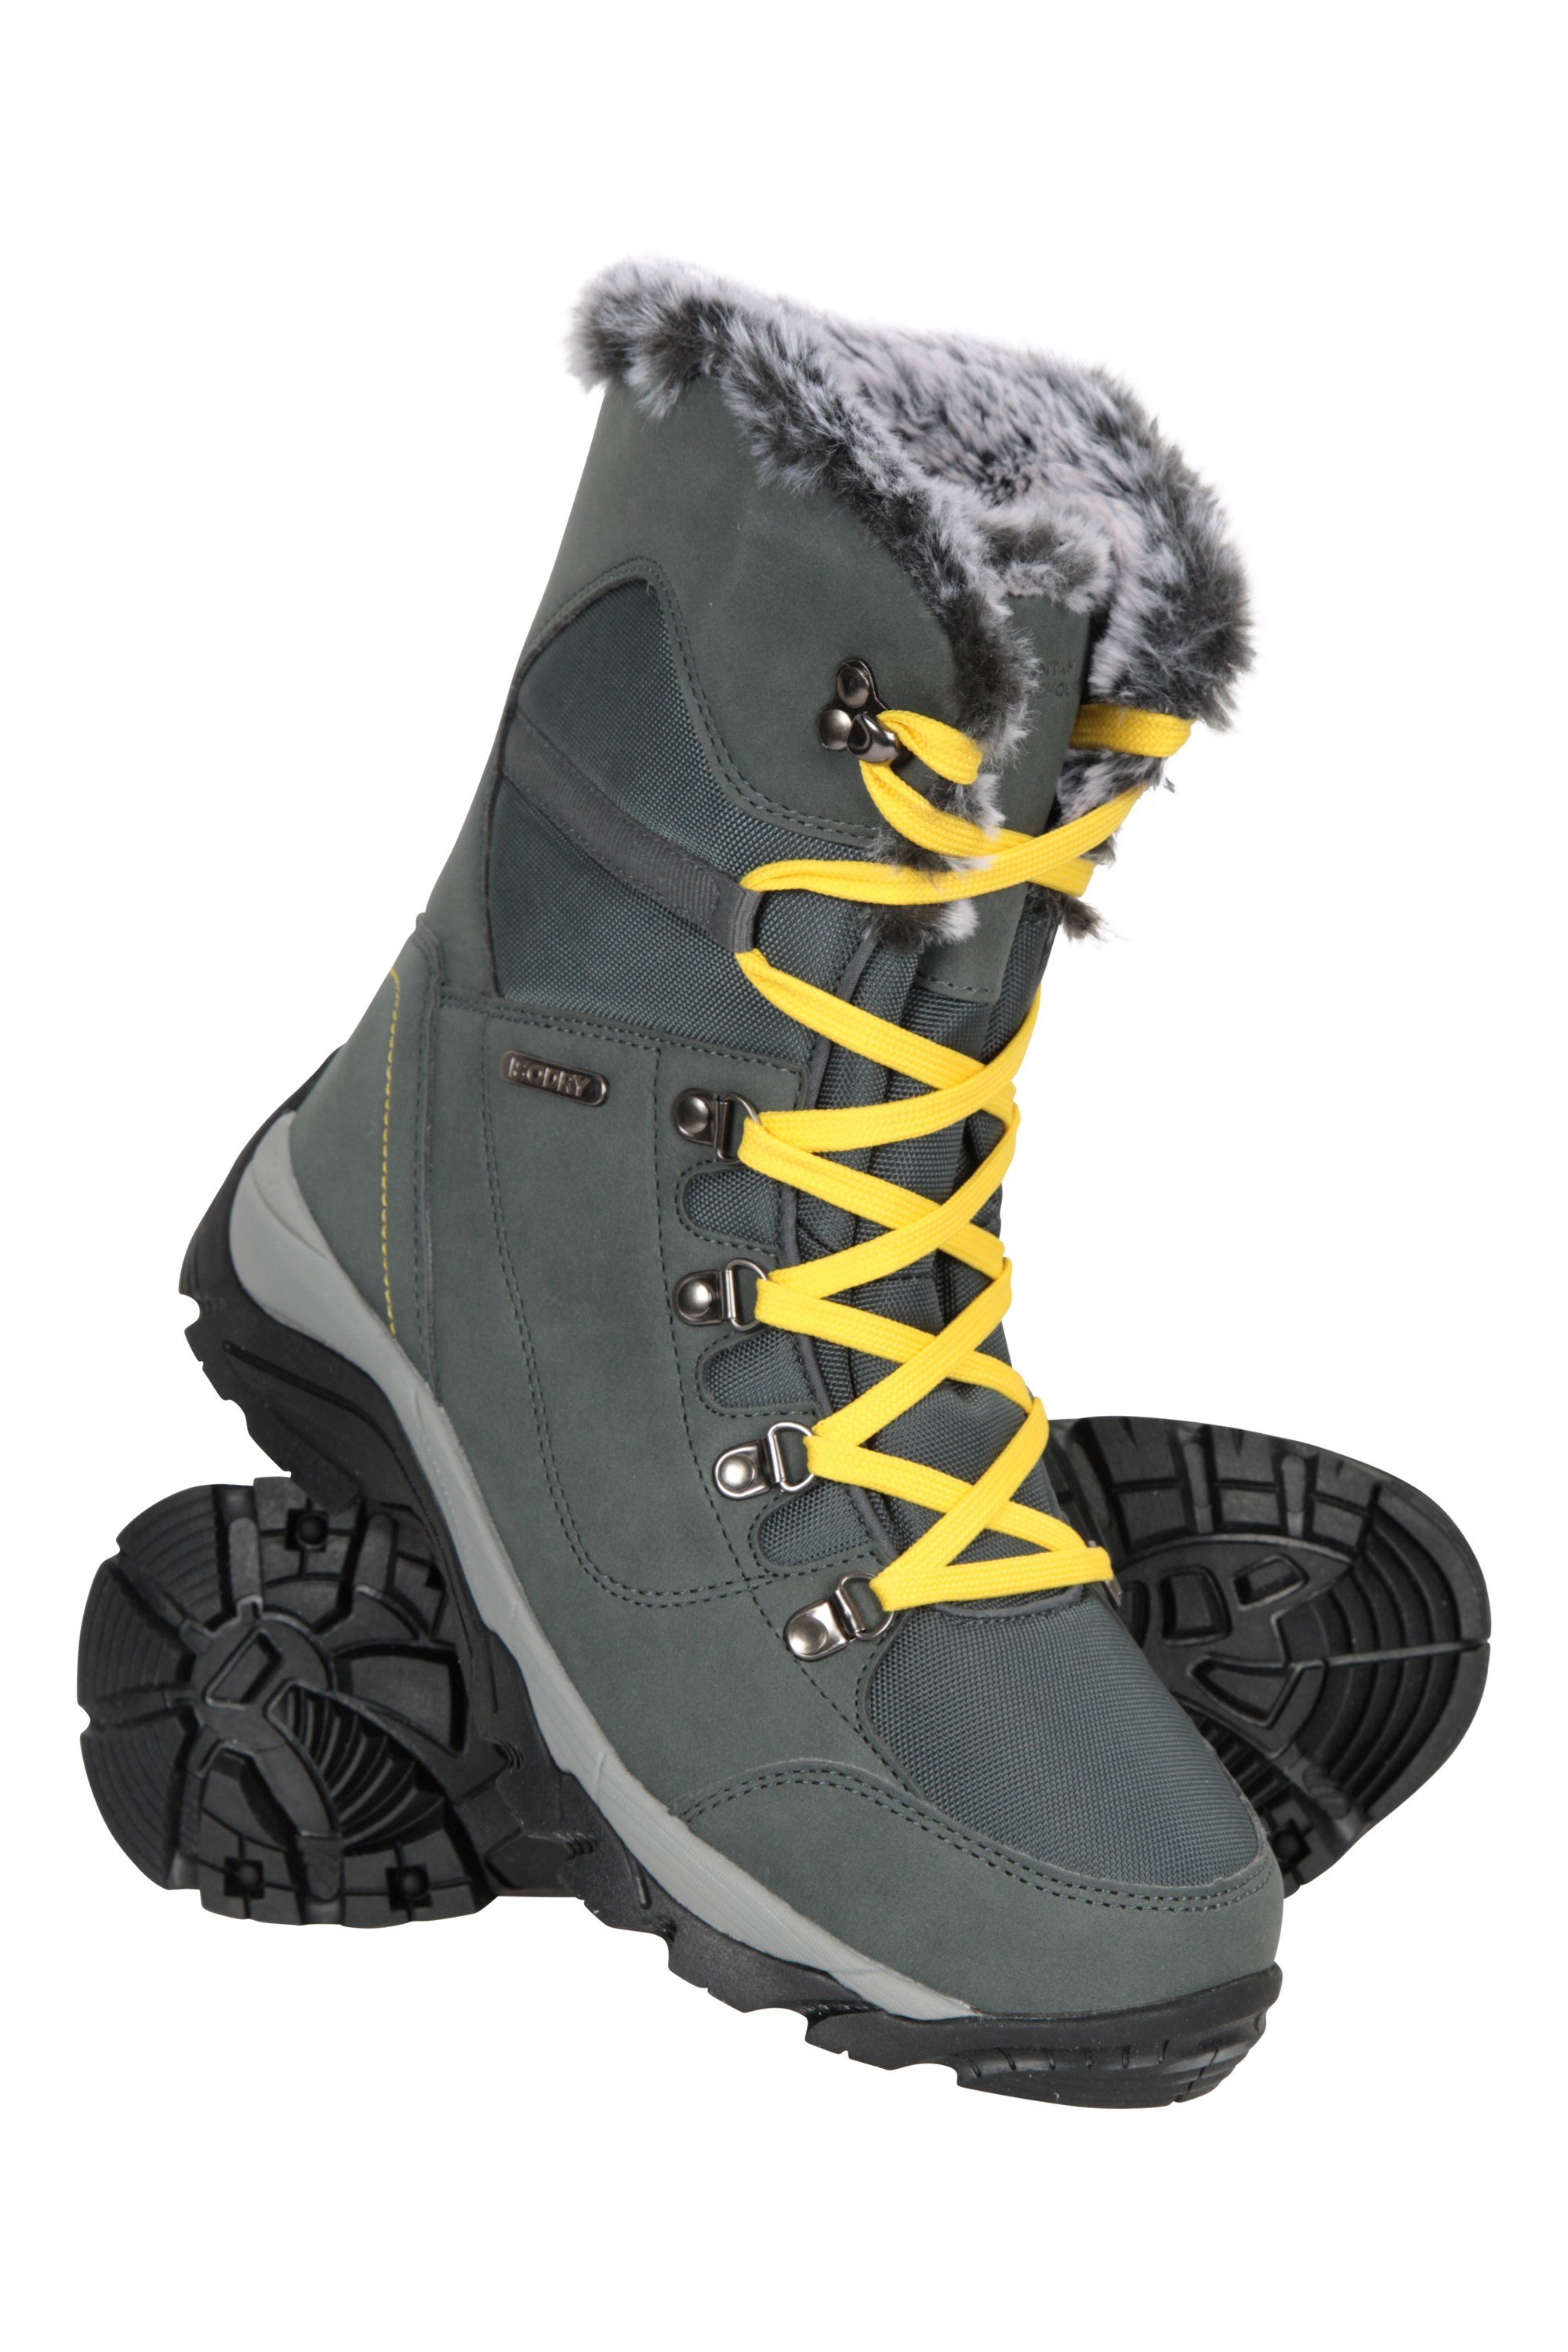 Banff Womens Waterproof Snow Boots - Charcoal